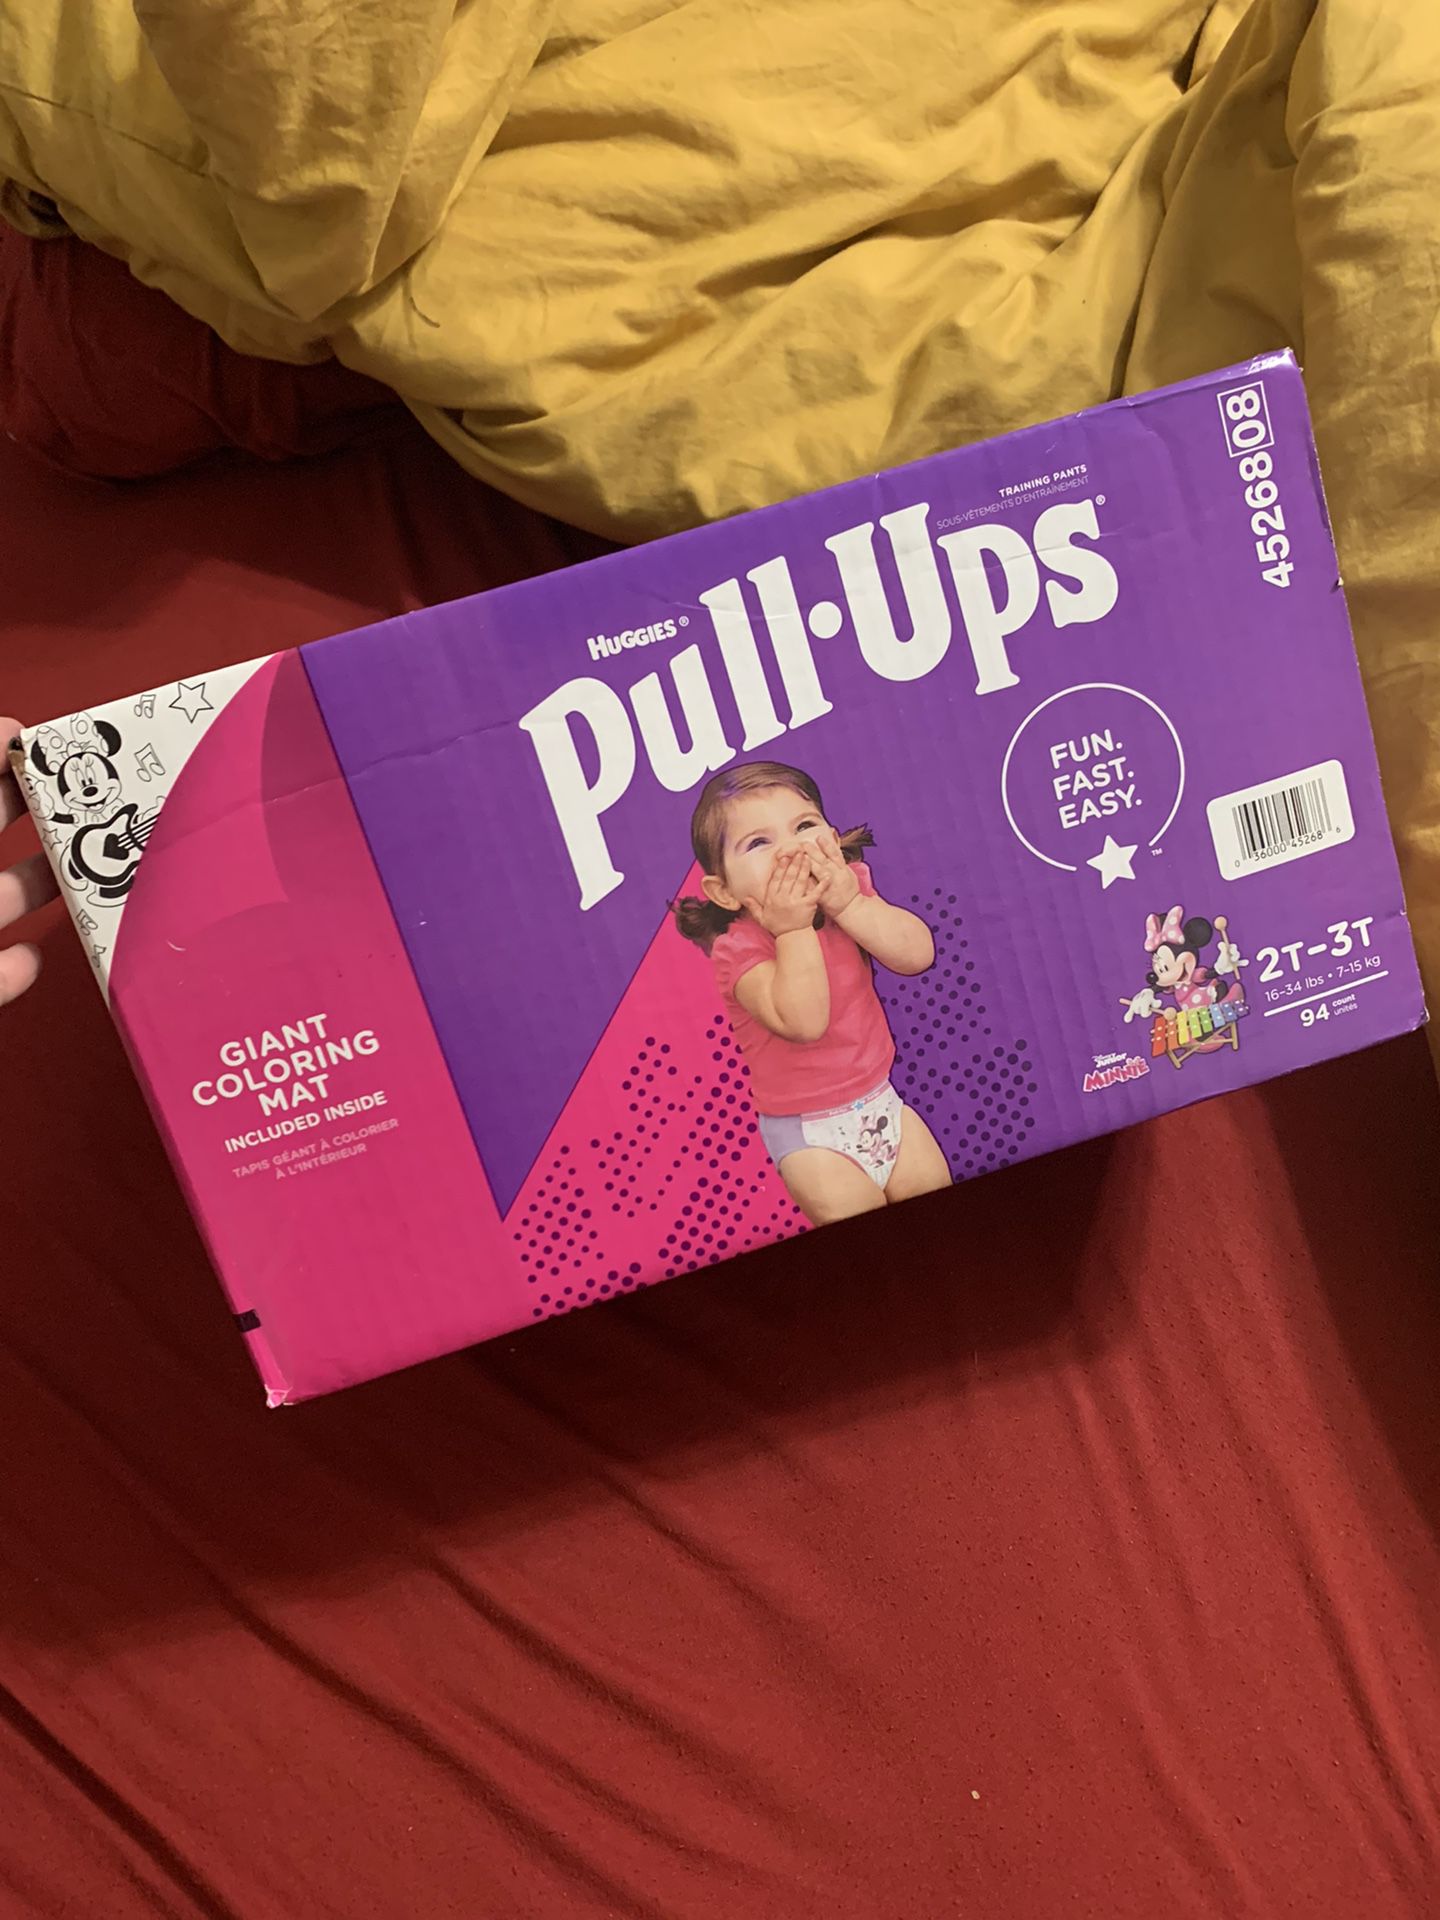 Huggies Pull-Ups Girls Training Pants, 2T - 3T, 94 Count